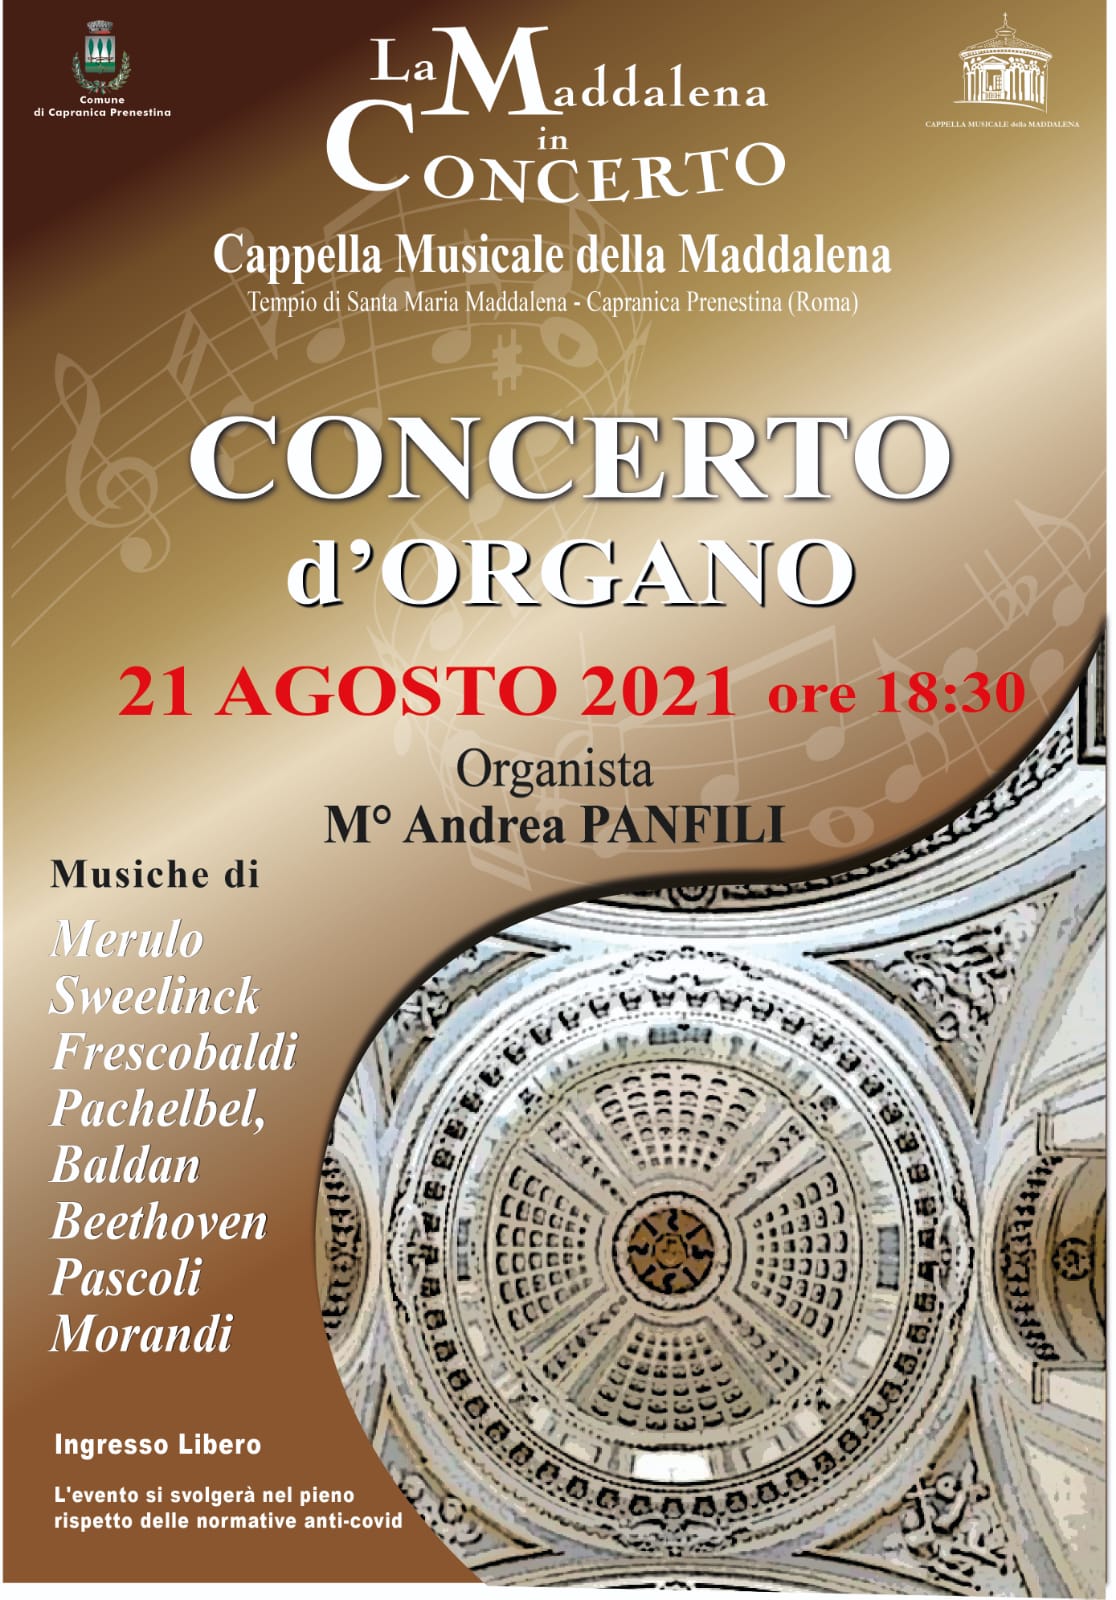 A Capranica Prenestina concerto d'organo del Maestro Andrea Panfili